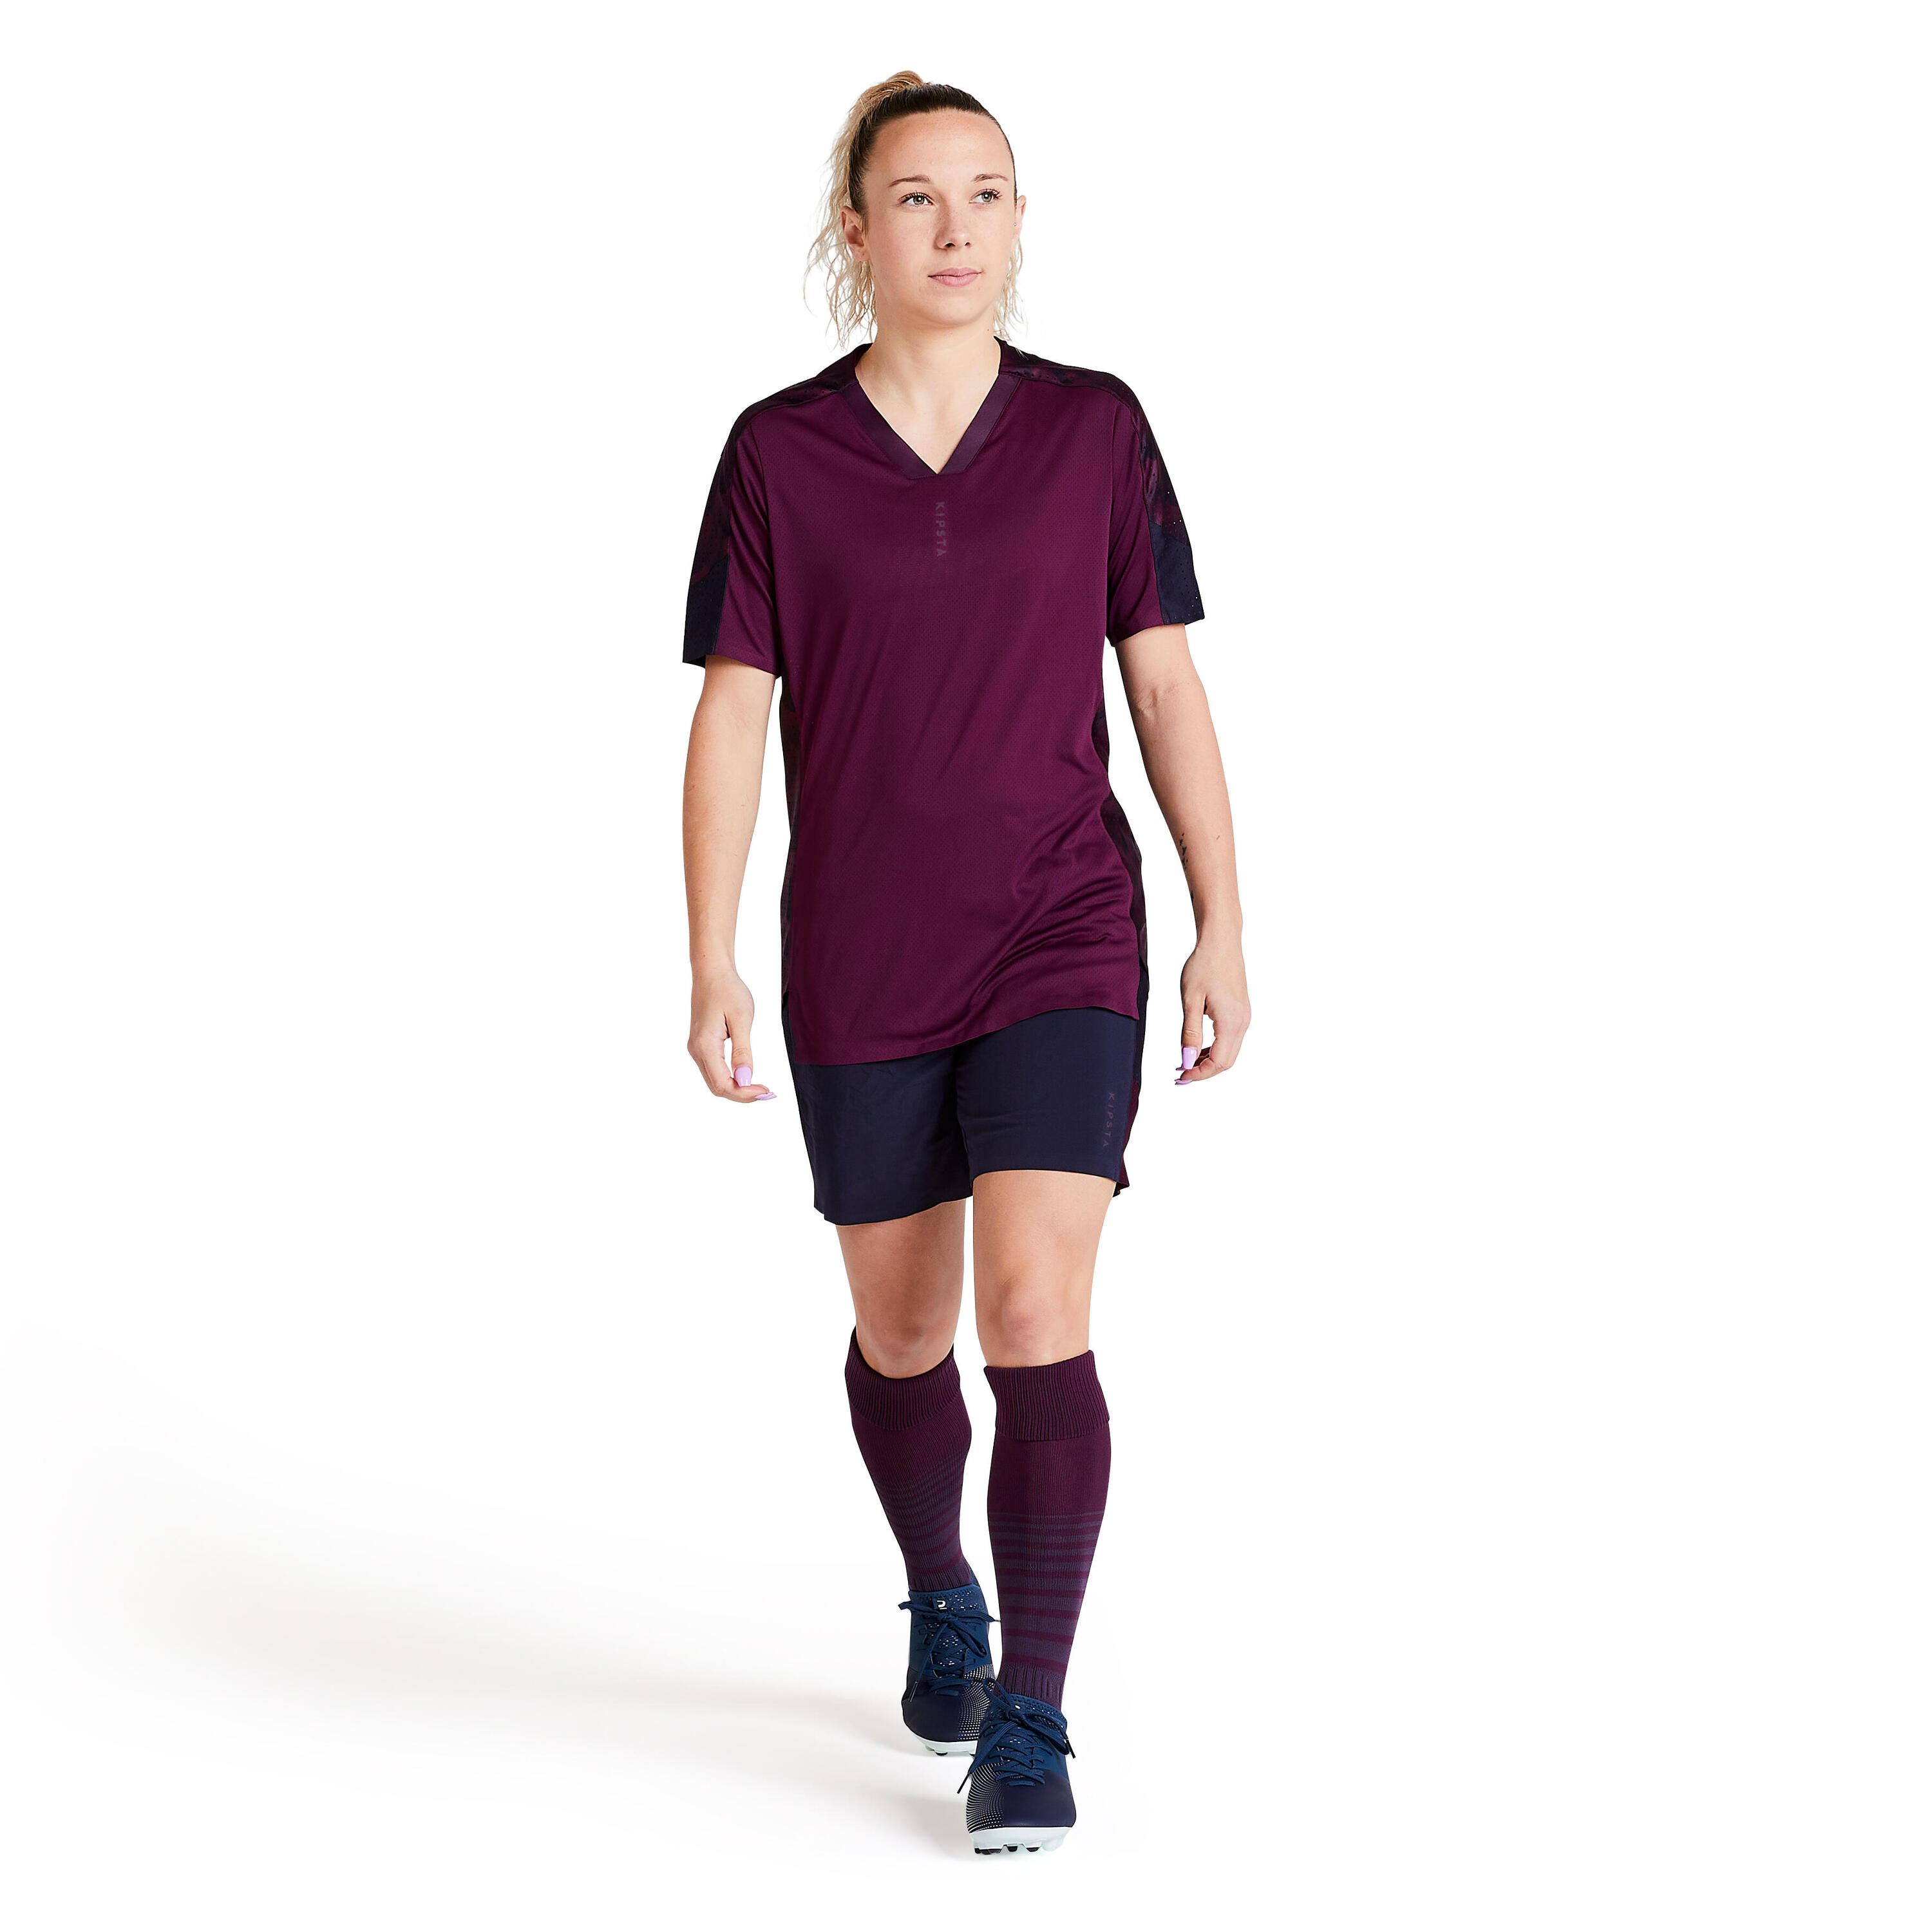 Women's Football Shorts F900 - Blue/Black 11/25